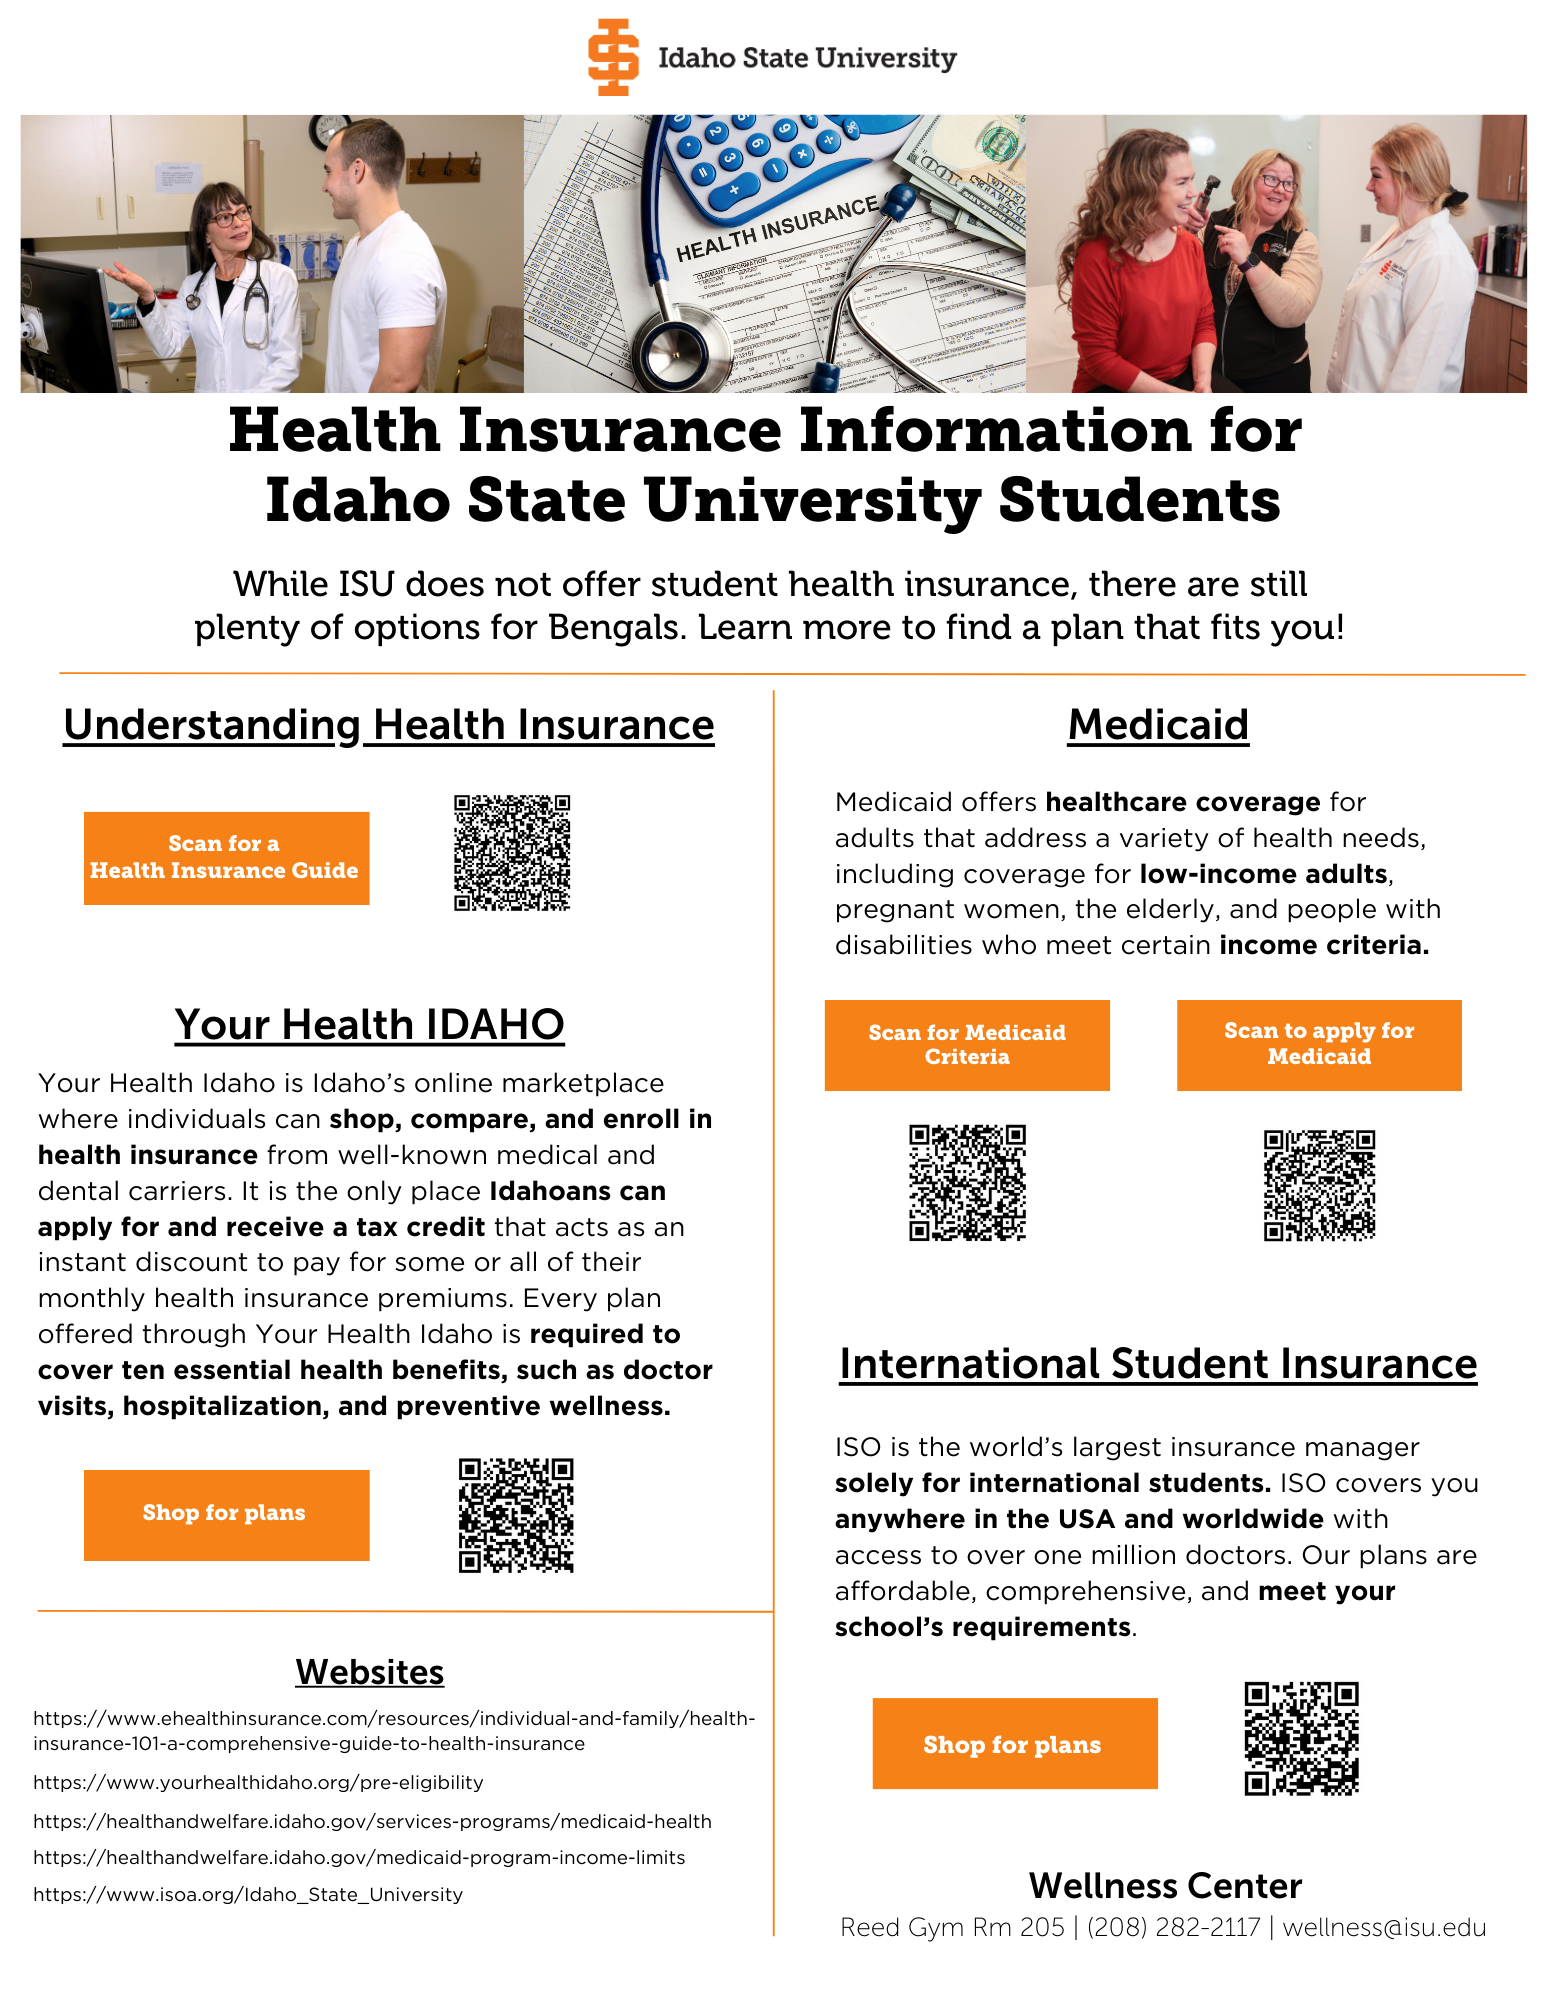 Health Insurance Information Document